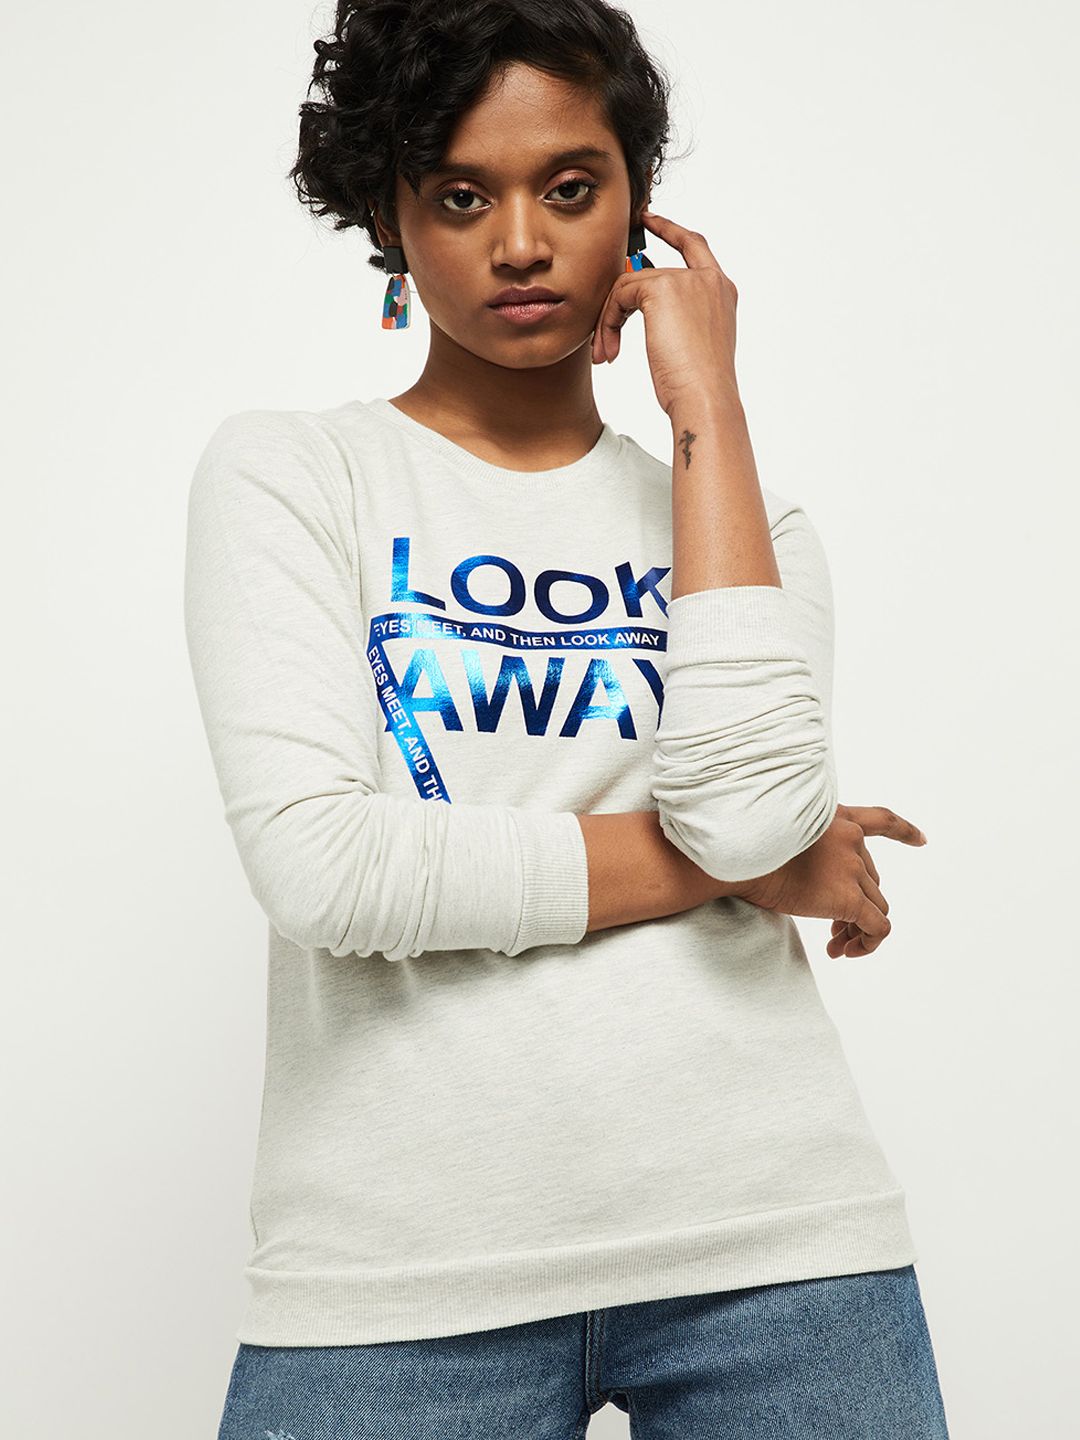 max Women Grey Printed Sweatshirt Price in India